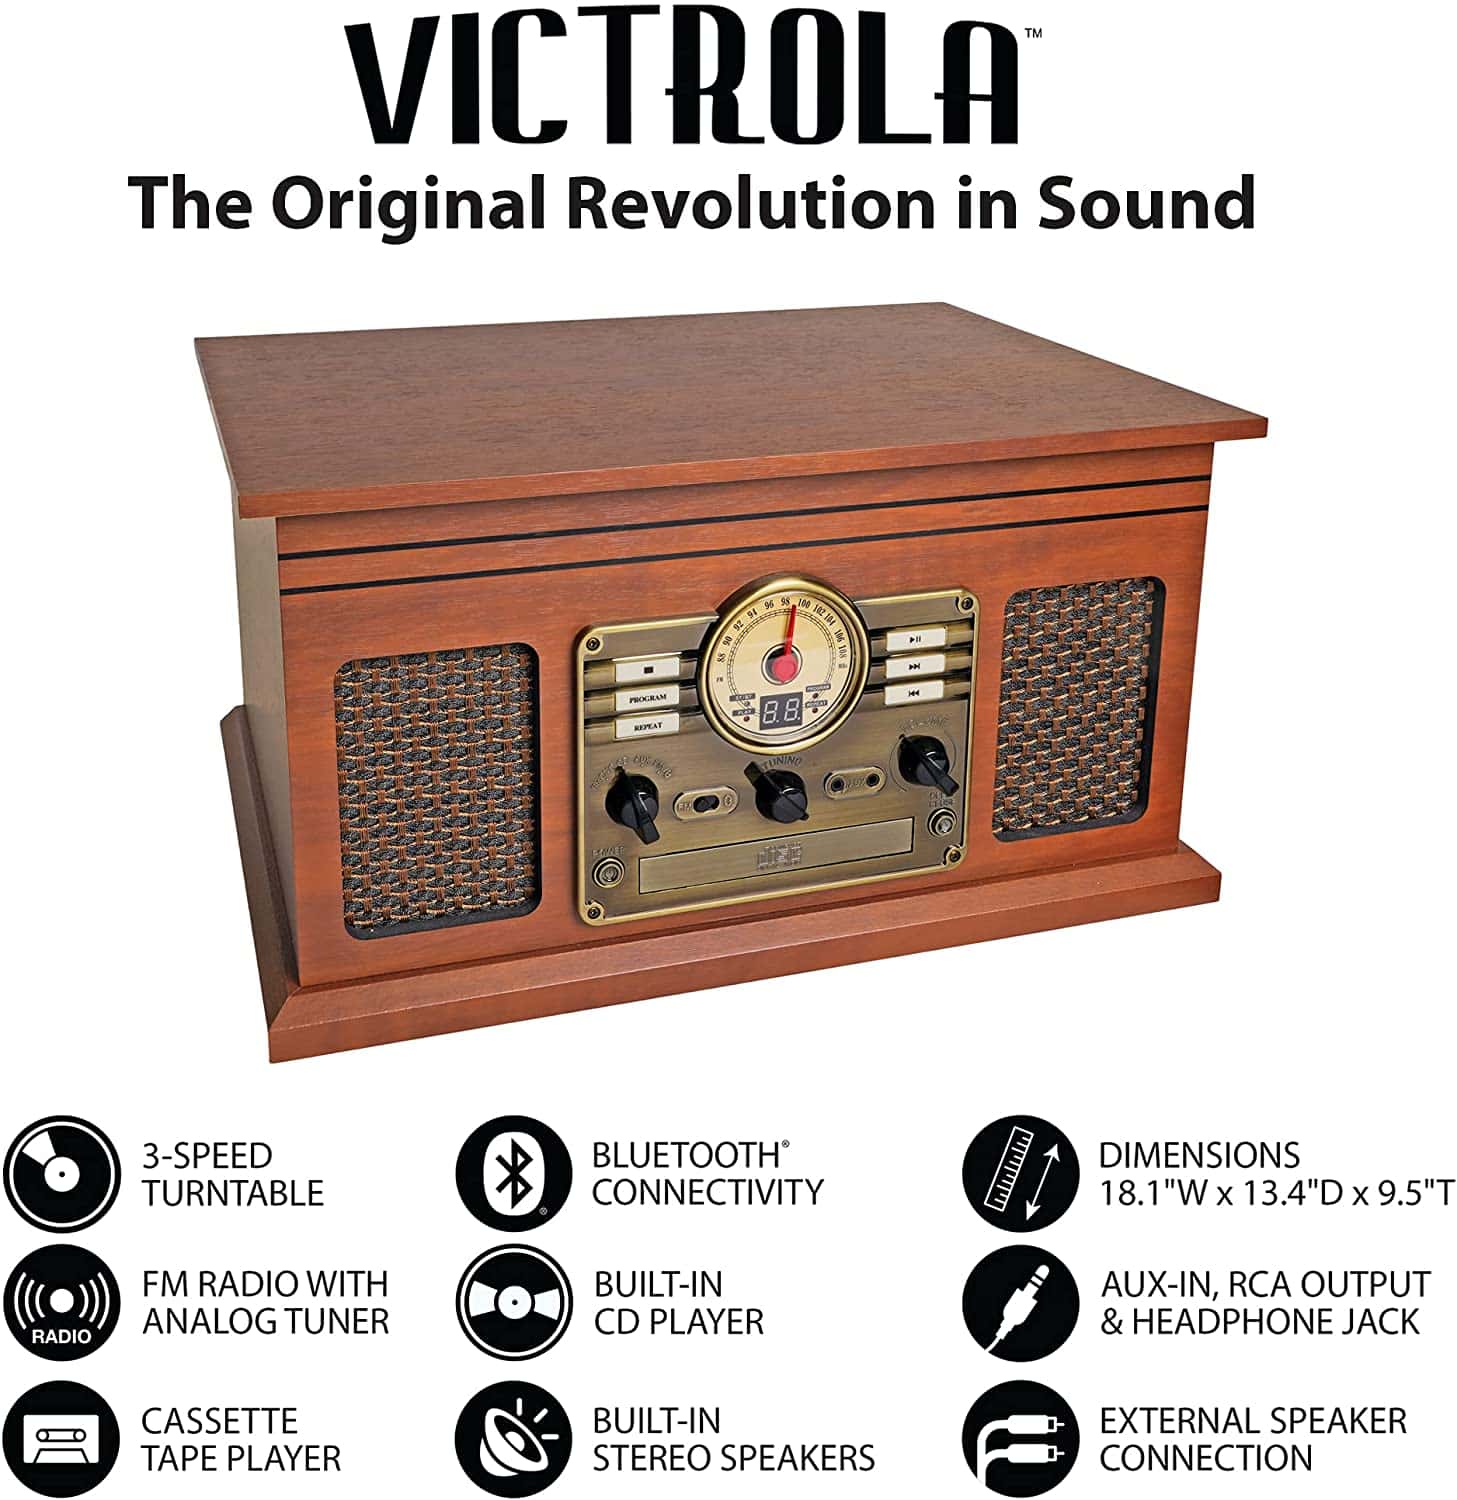 Victrola Nostalgic Multimedia Center features